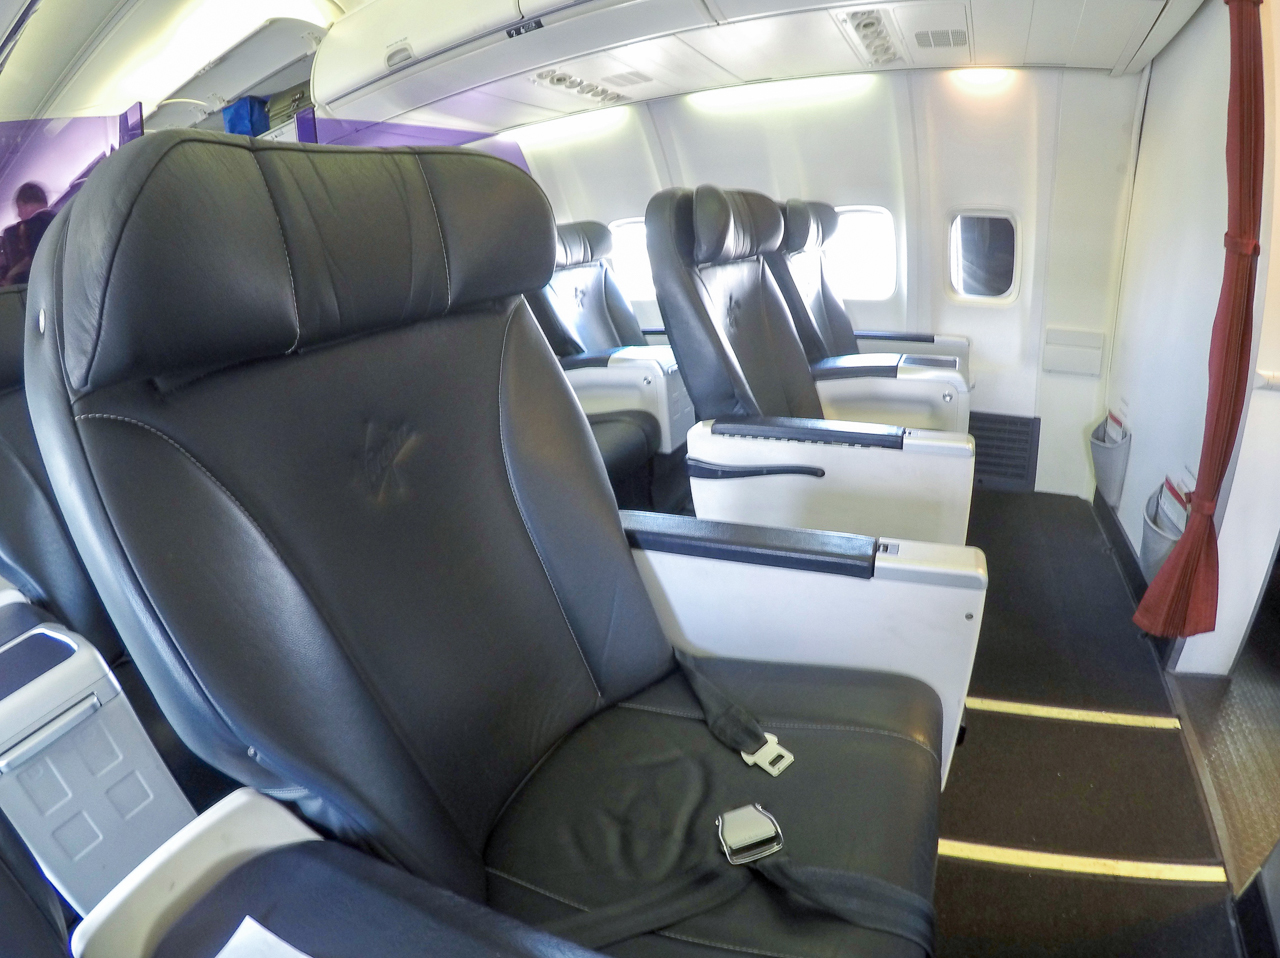 Virgin Australia 737 Domestic Business Class